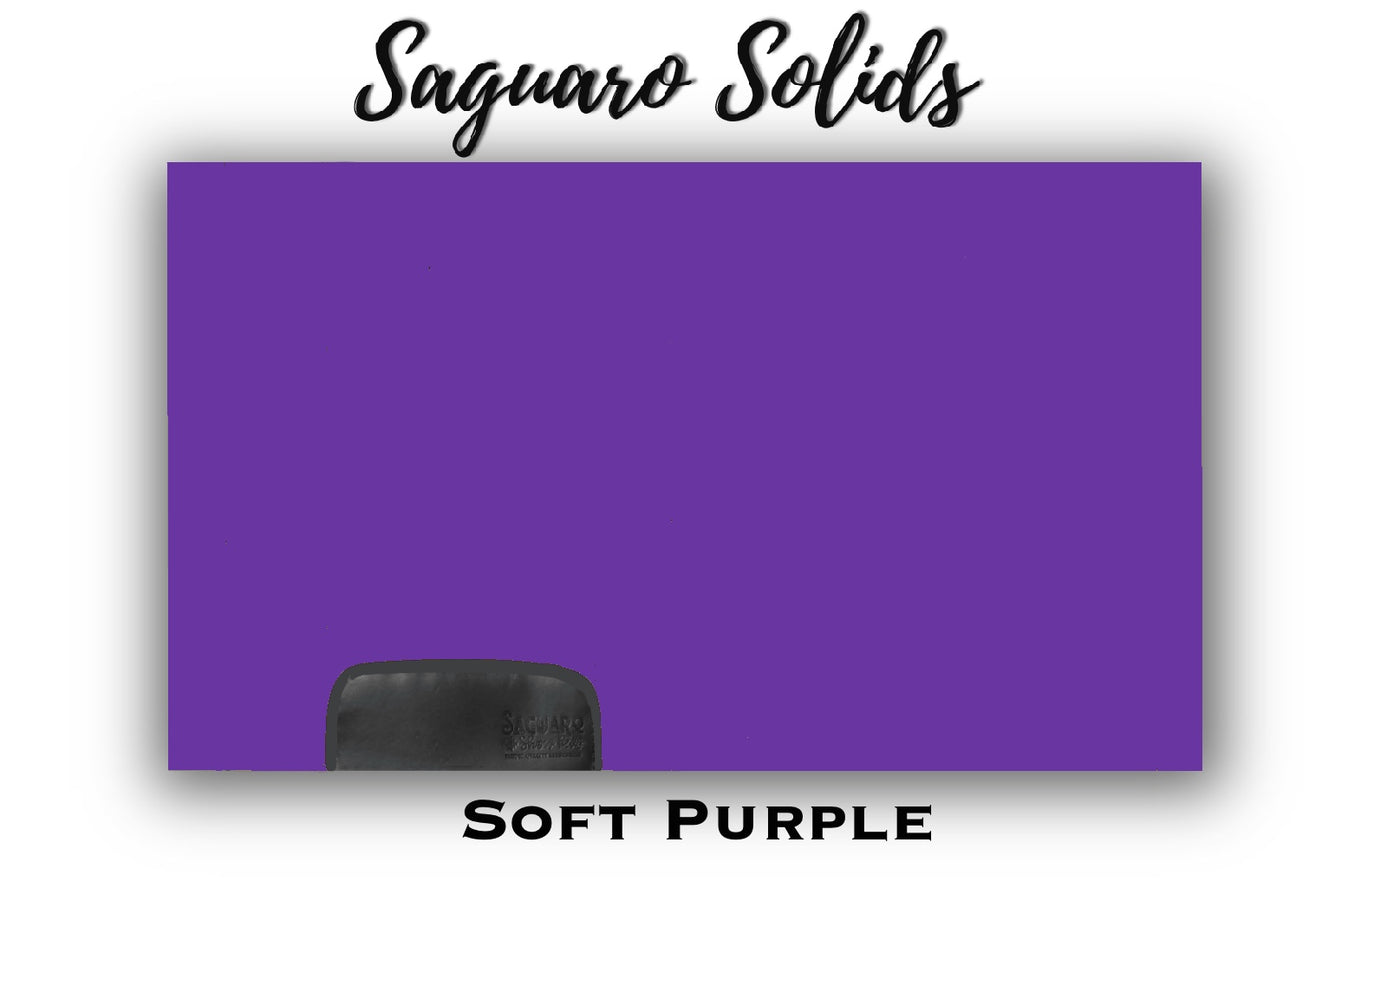 Saguaro Solid "Soft Purple" Show Pad (SEMI-CUSTOM)